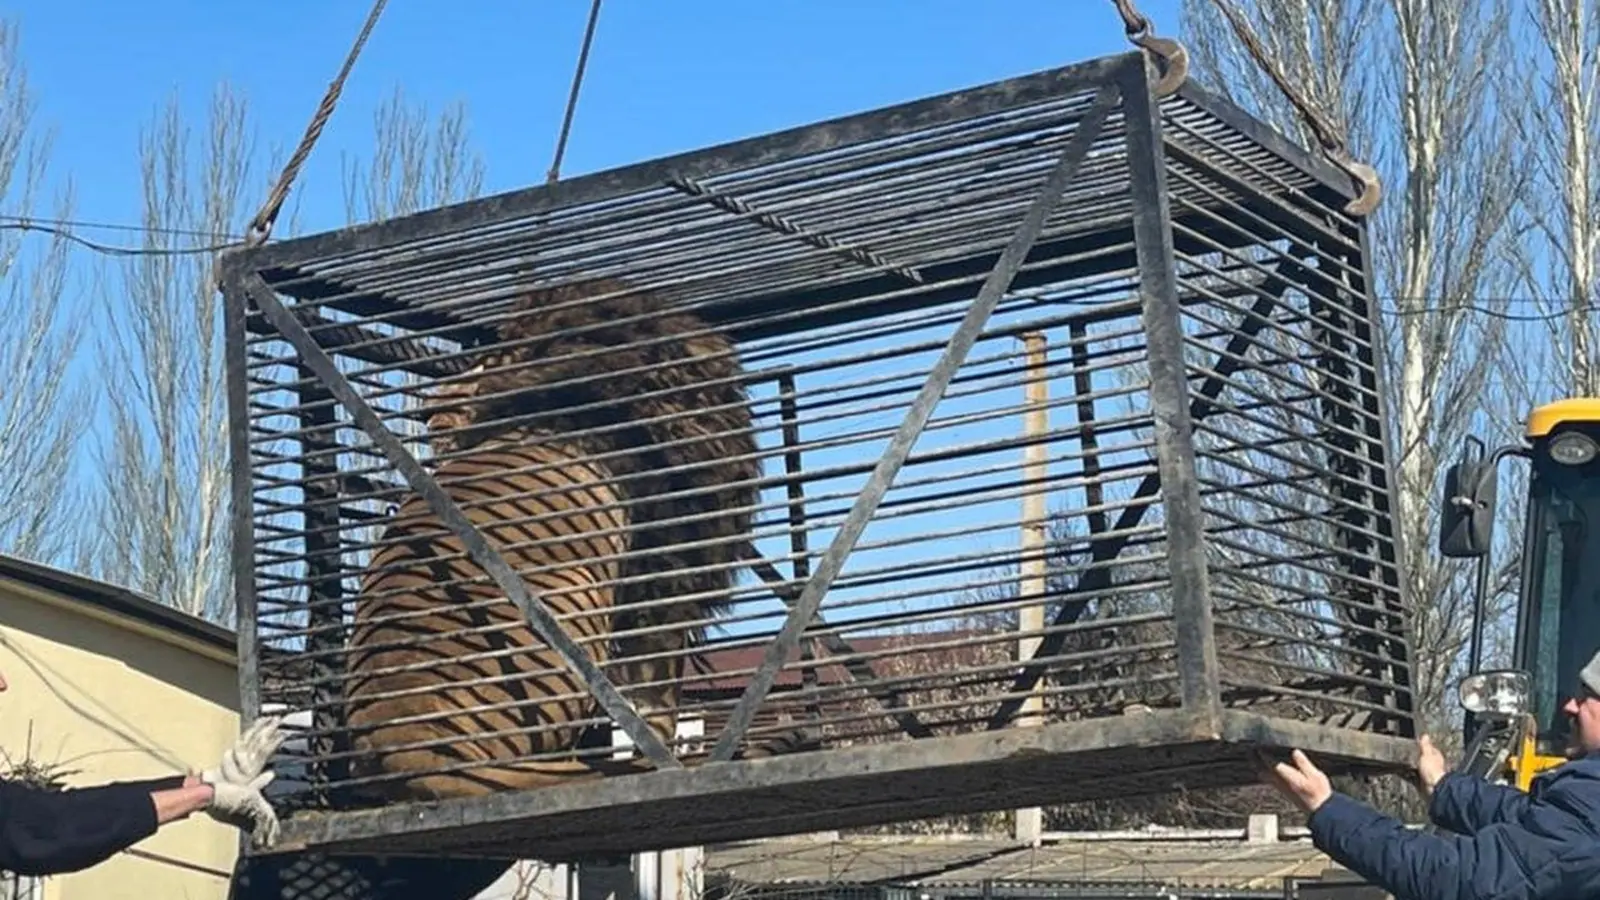 British man travels across Ukraine, evacuates lion and wolf from zoo